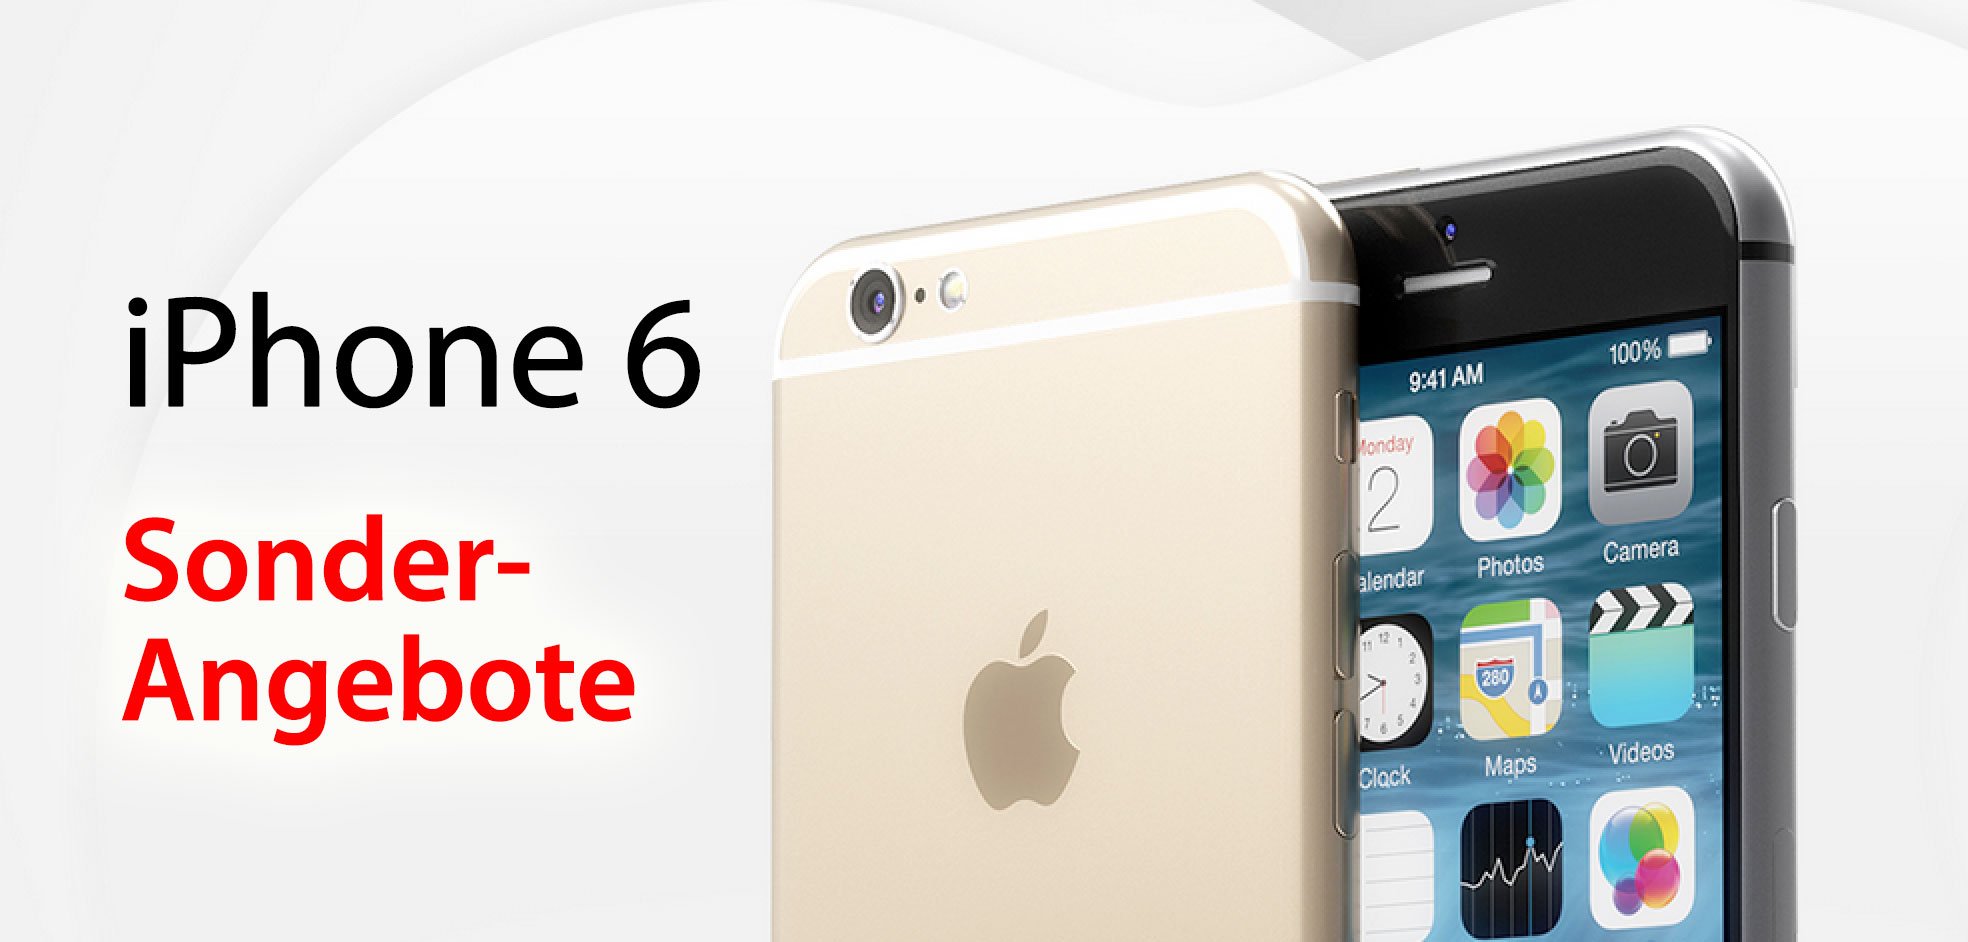 iPhone 6 Angebote: Sonderangebote mit neuem iPhone 6? 1